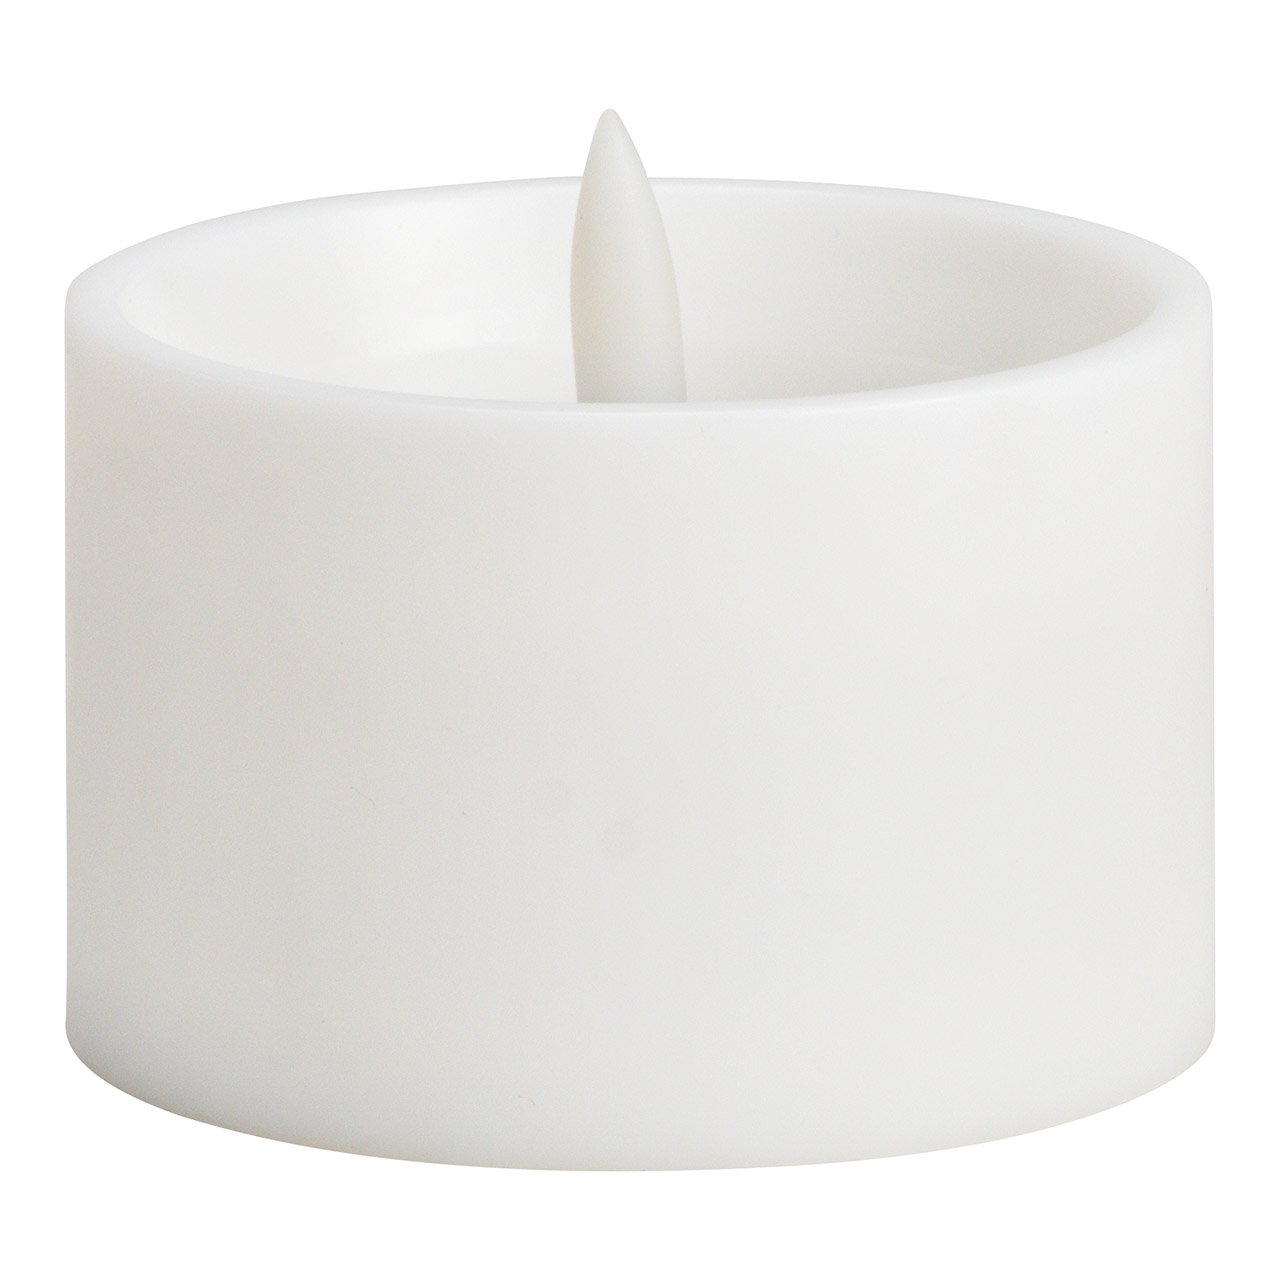 LED Outdoor Kerze aus Kunststoff mit Timer, Weiß (B/H/T) 8x6x8cm, exklusive 2xAA